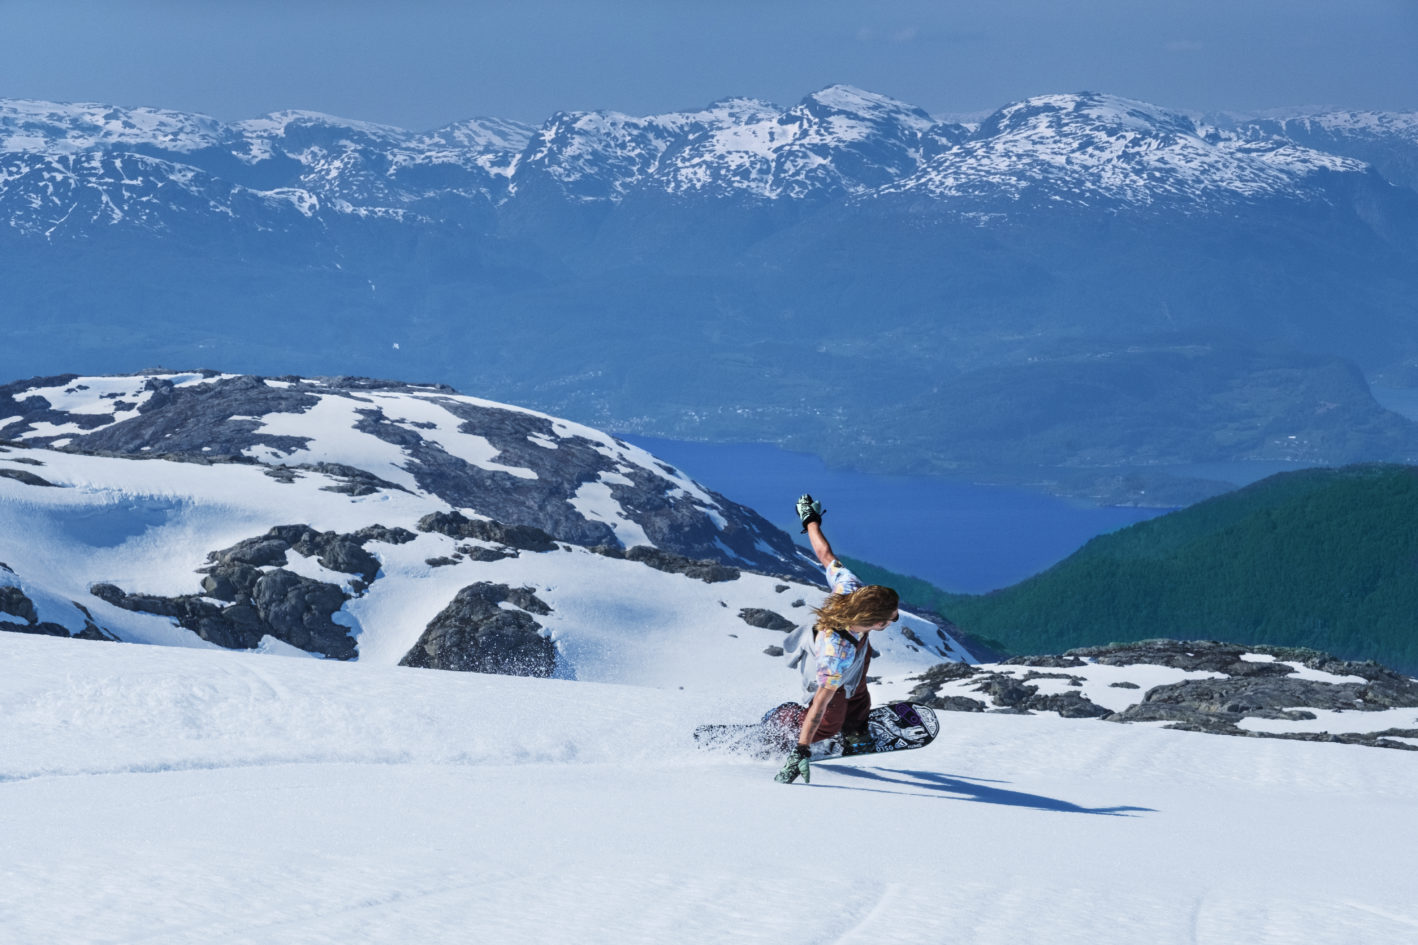 Fonna Glacier Ski Resort